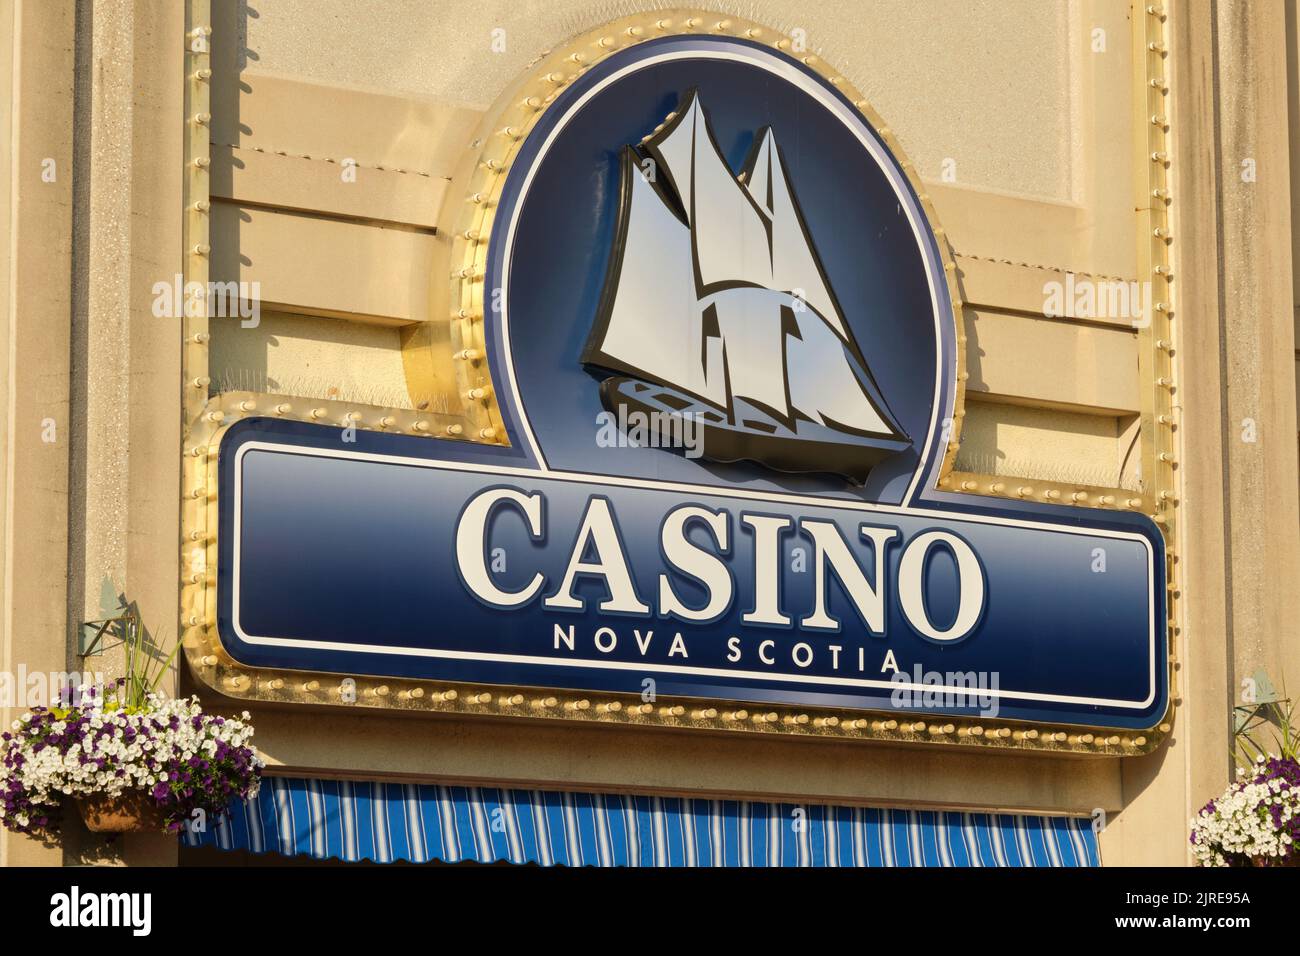 Casino Nova Scotia sign in Halifax Stock Photo